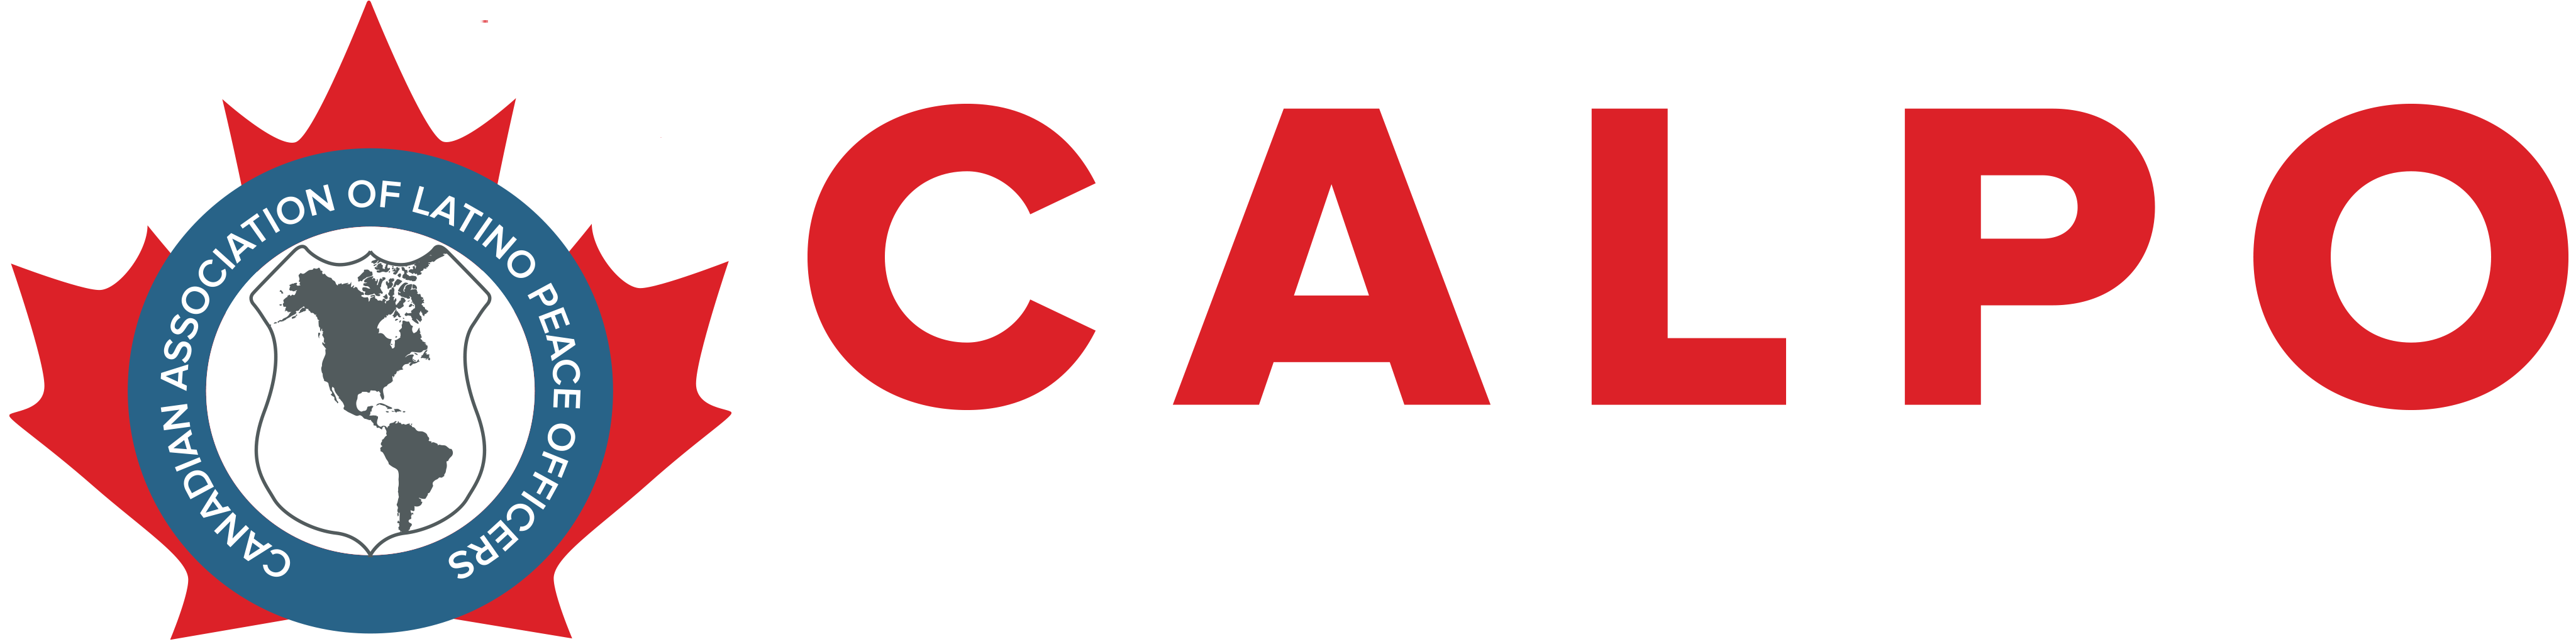 Calpo-Full-Logo-Header-1